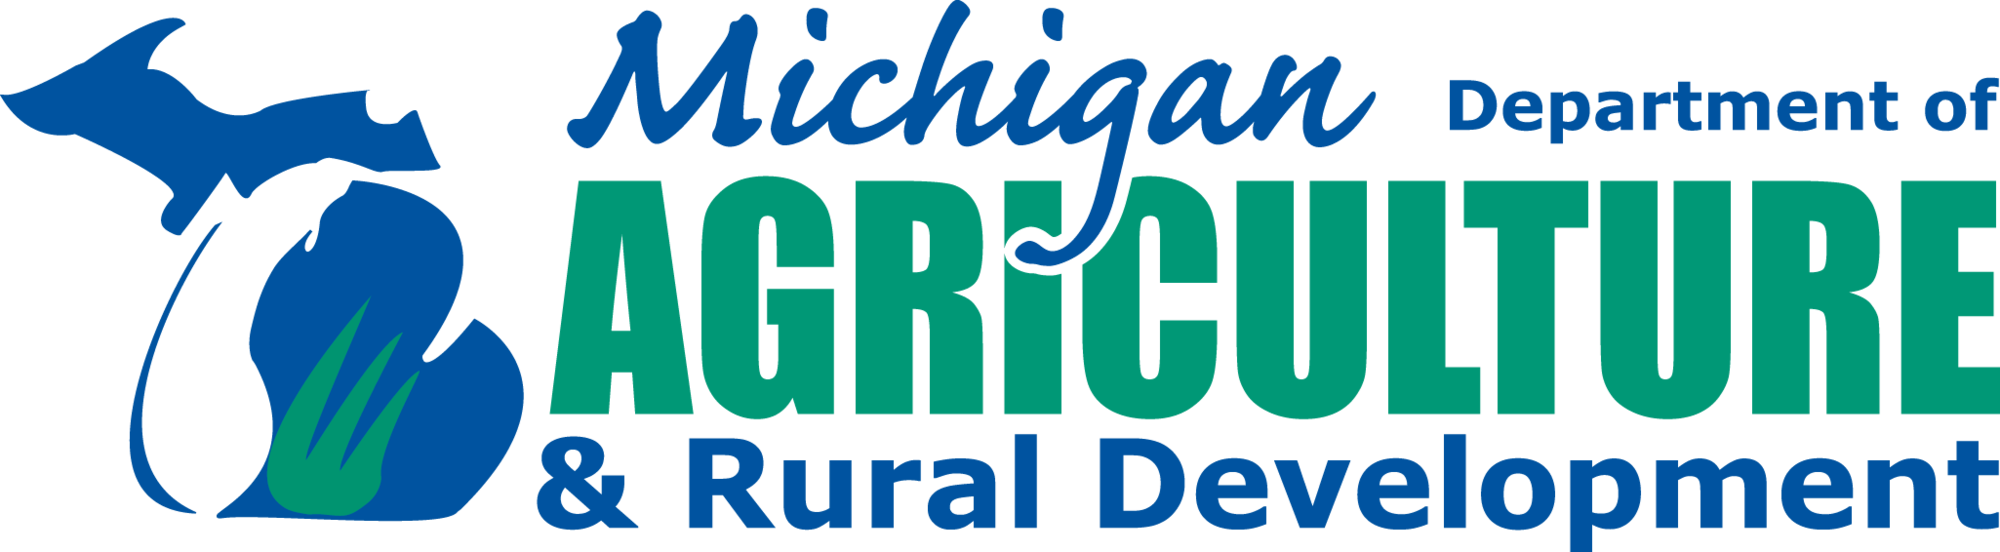 Gd-Vendor-logo-Michigan-Department-of-bob体育合法吗Agriculture